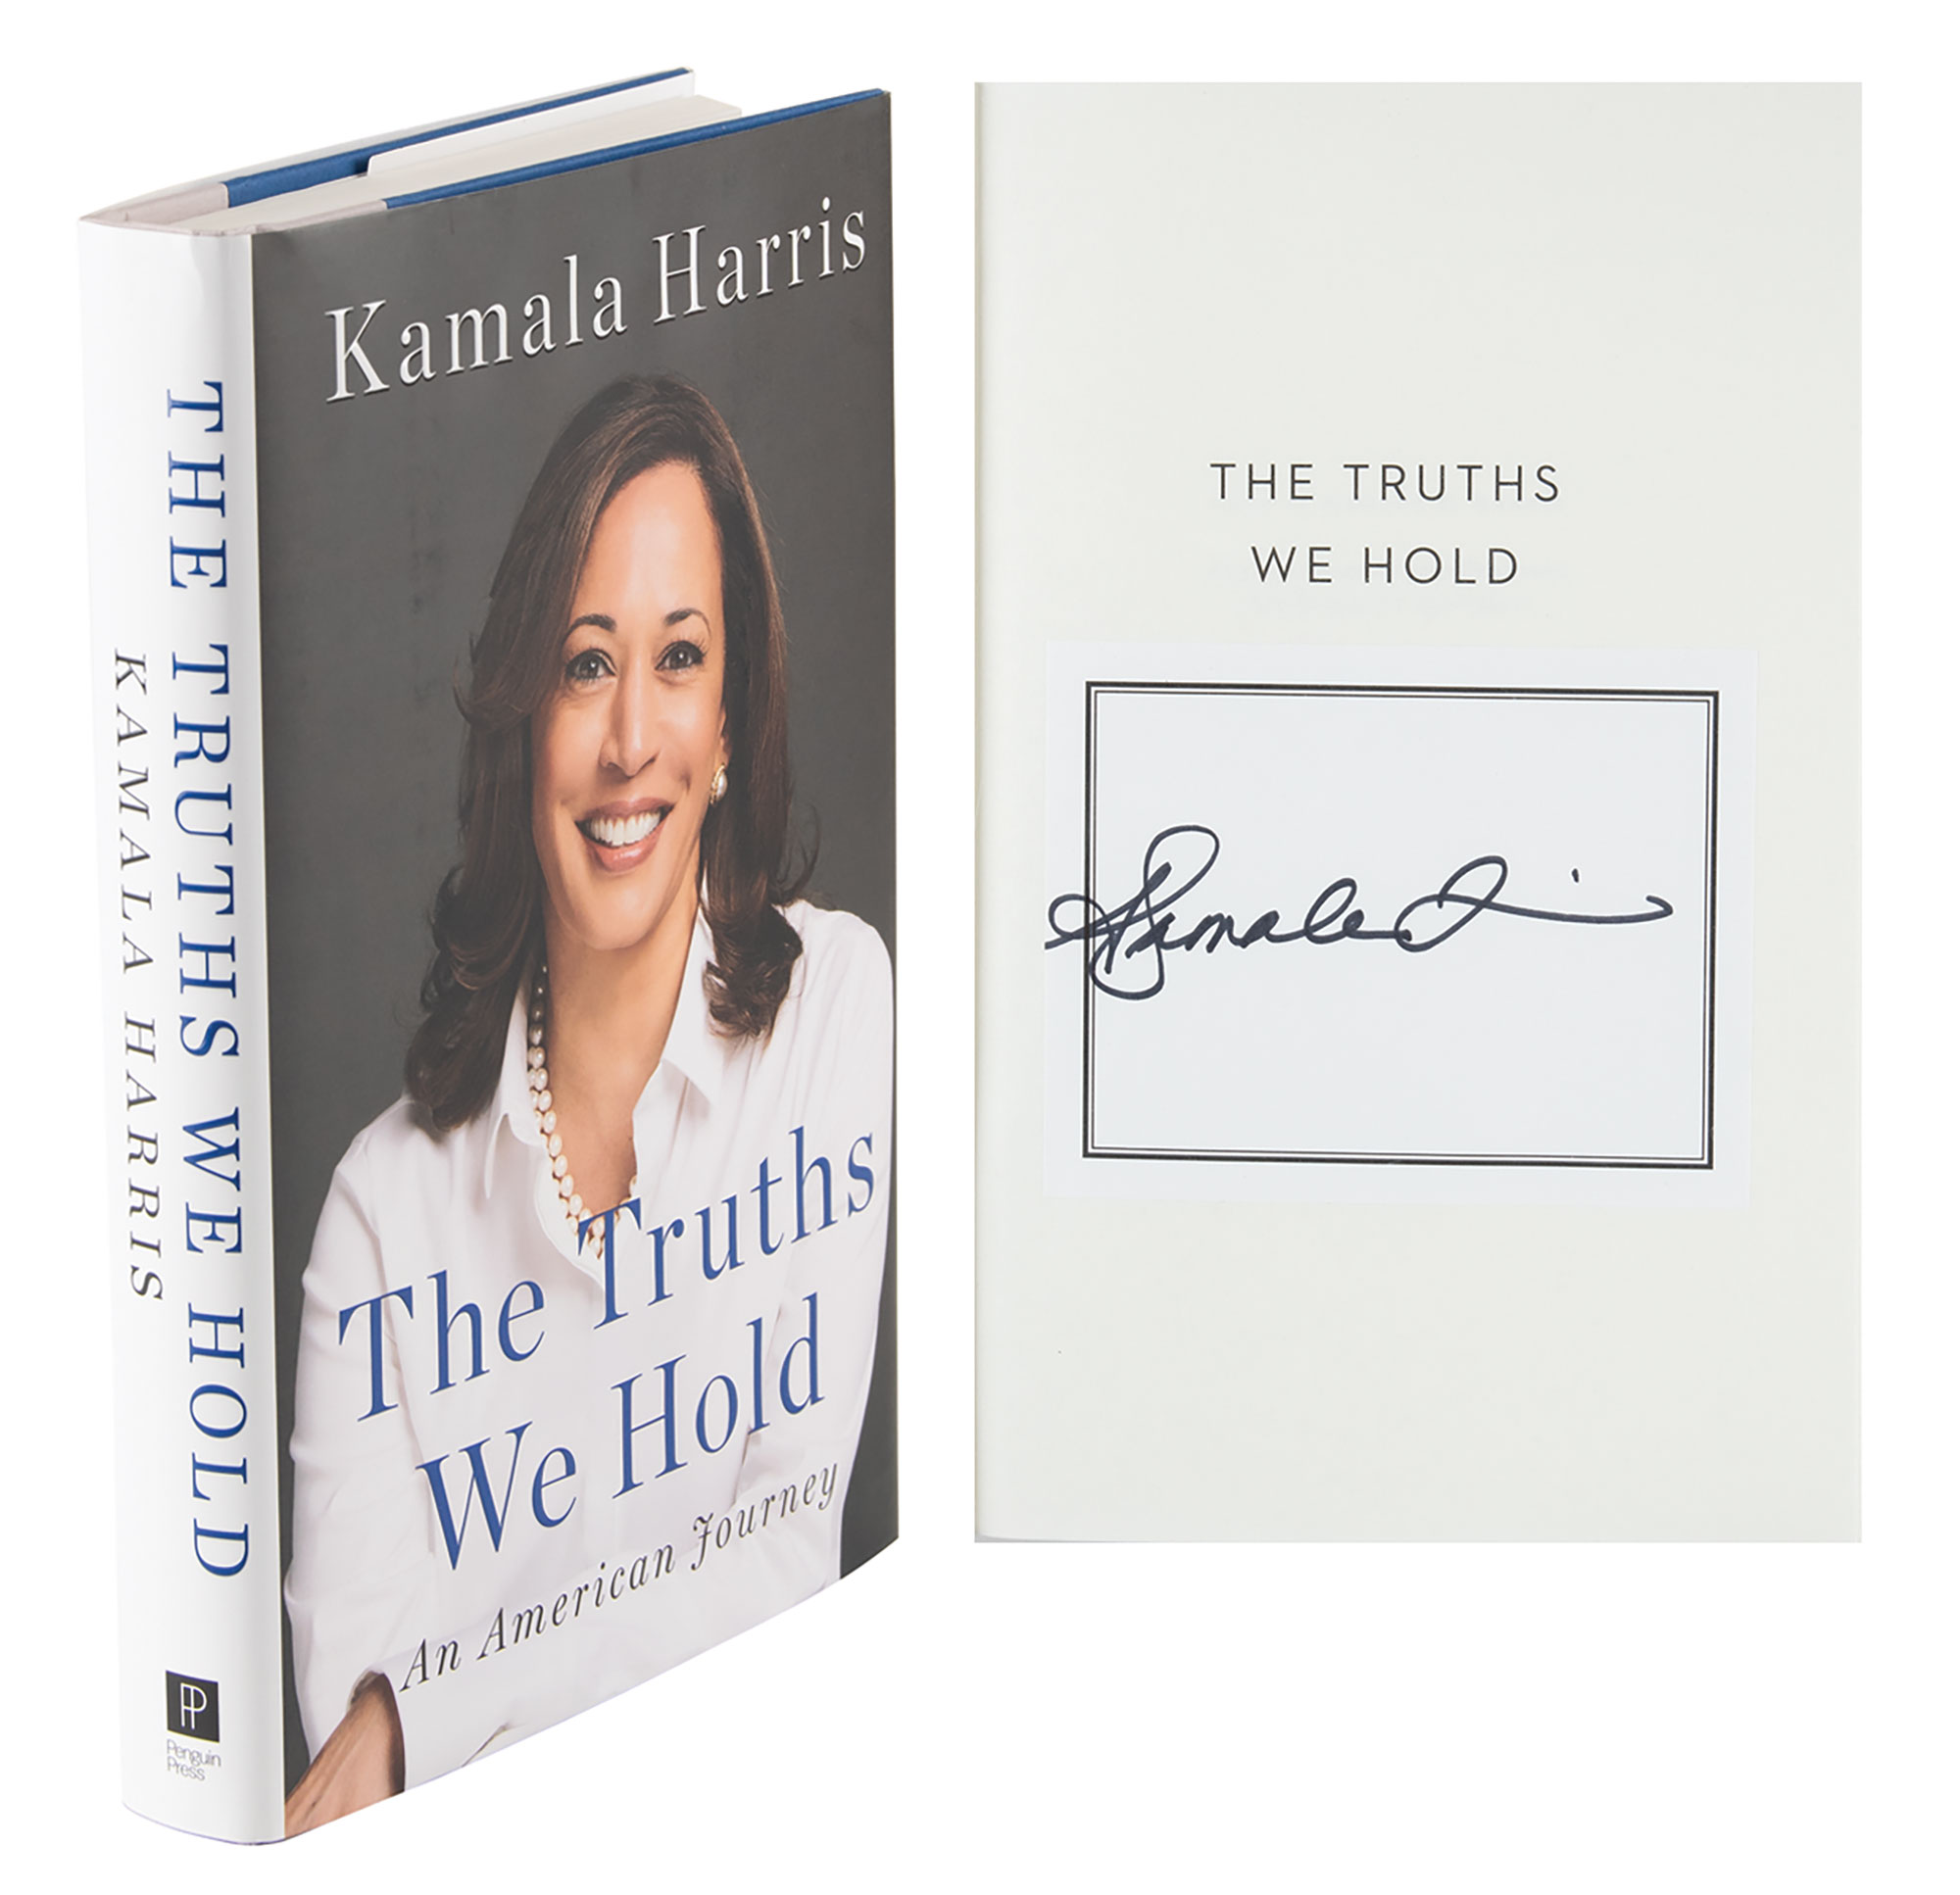 Lot #280 Kamala Harris Signed Book